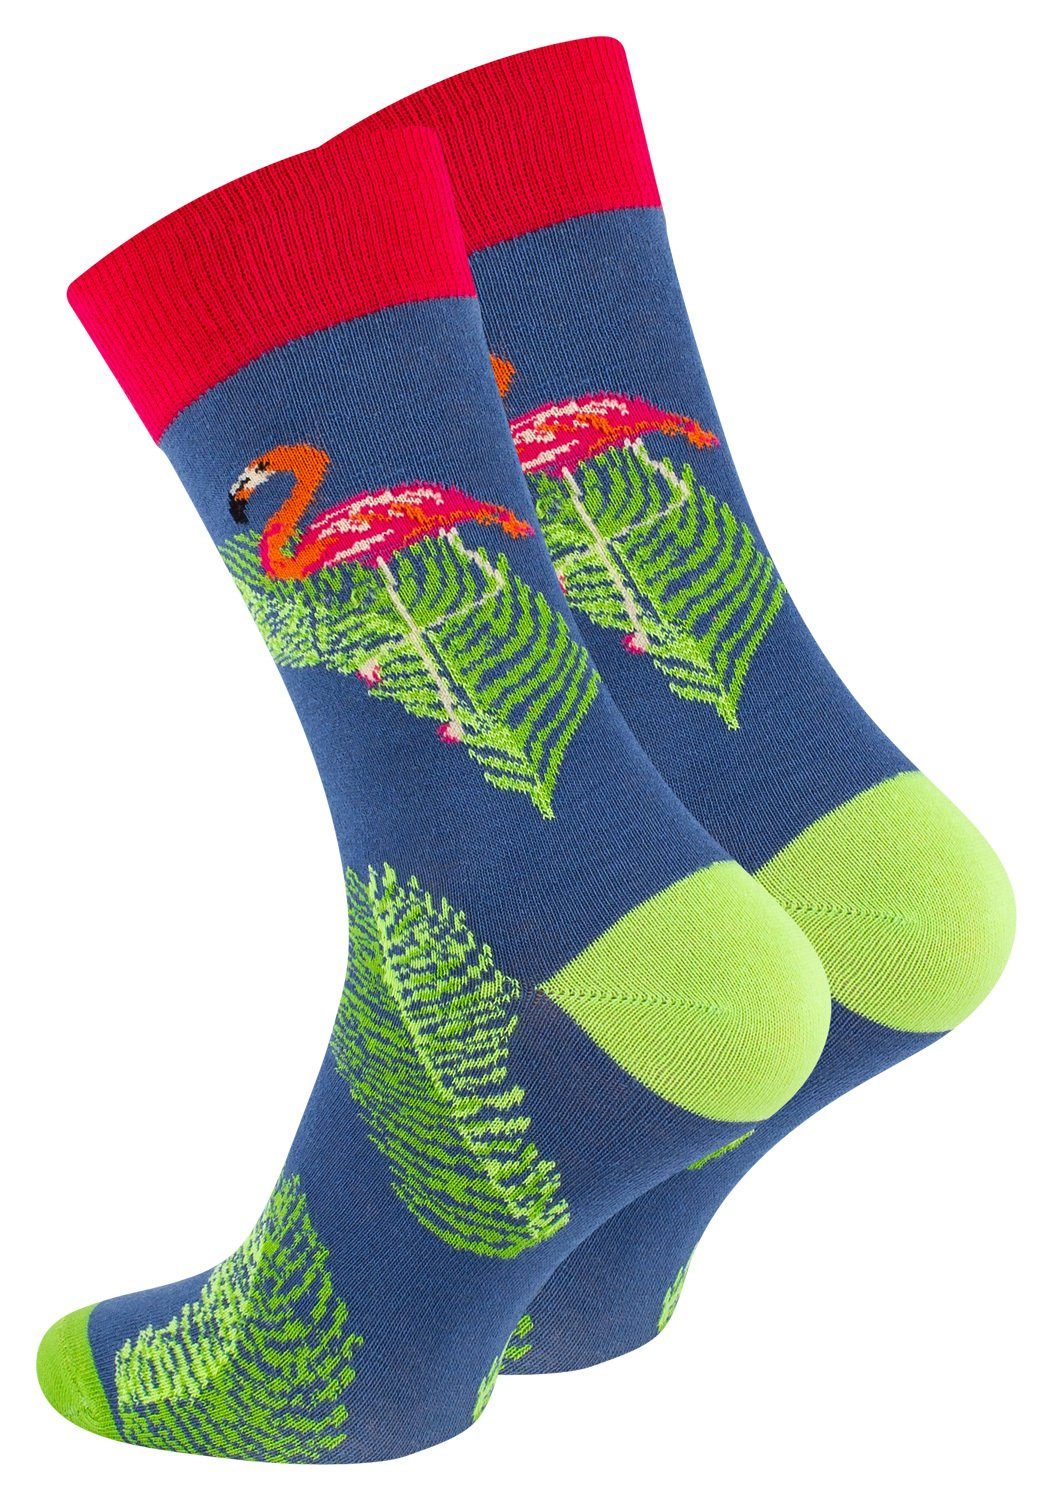 Vincent Creation® Socken mit HawaiiFlamingo bunten lustigen Motiven